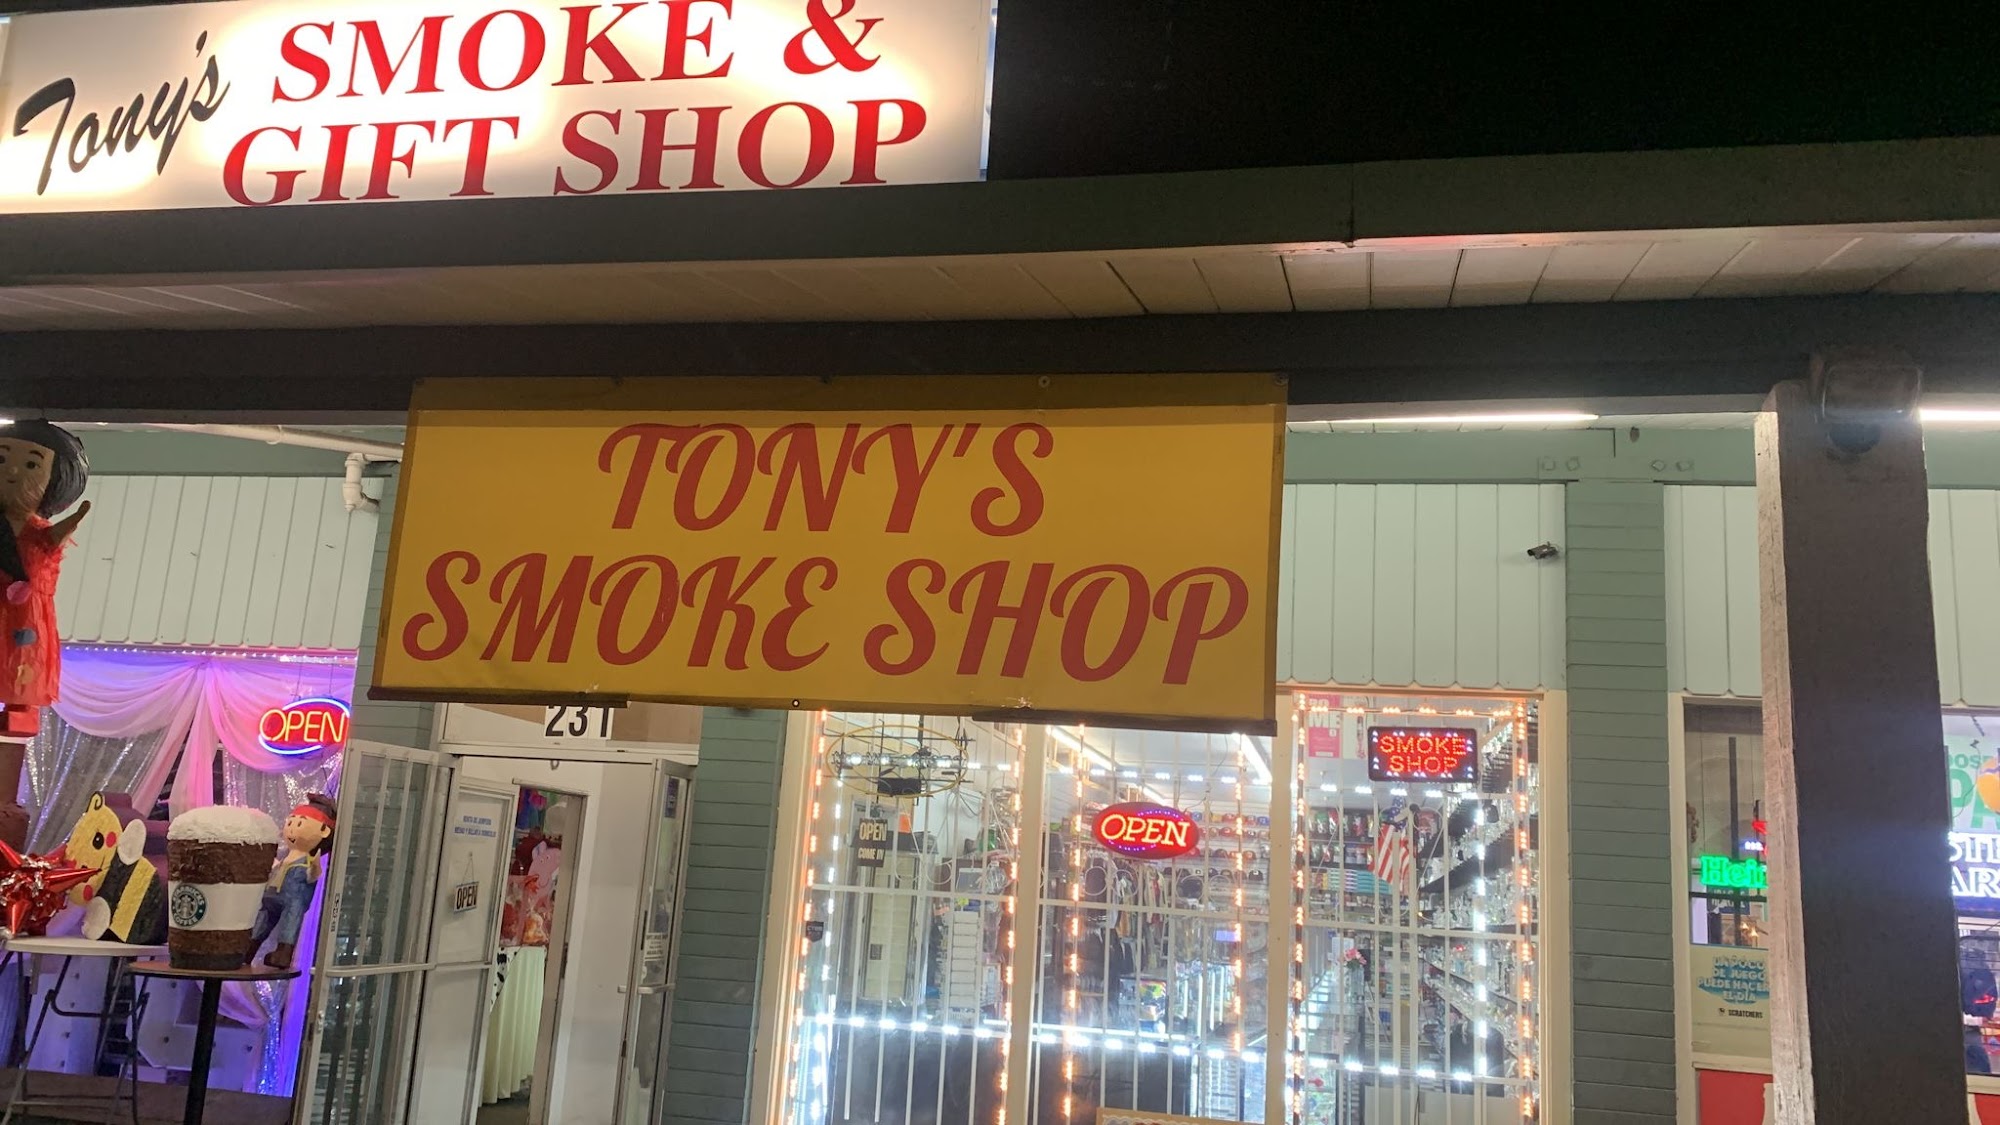 Tony's Smoke Shop